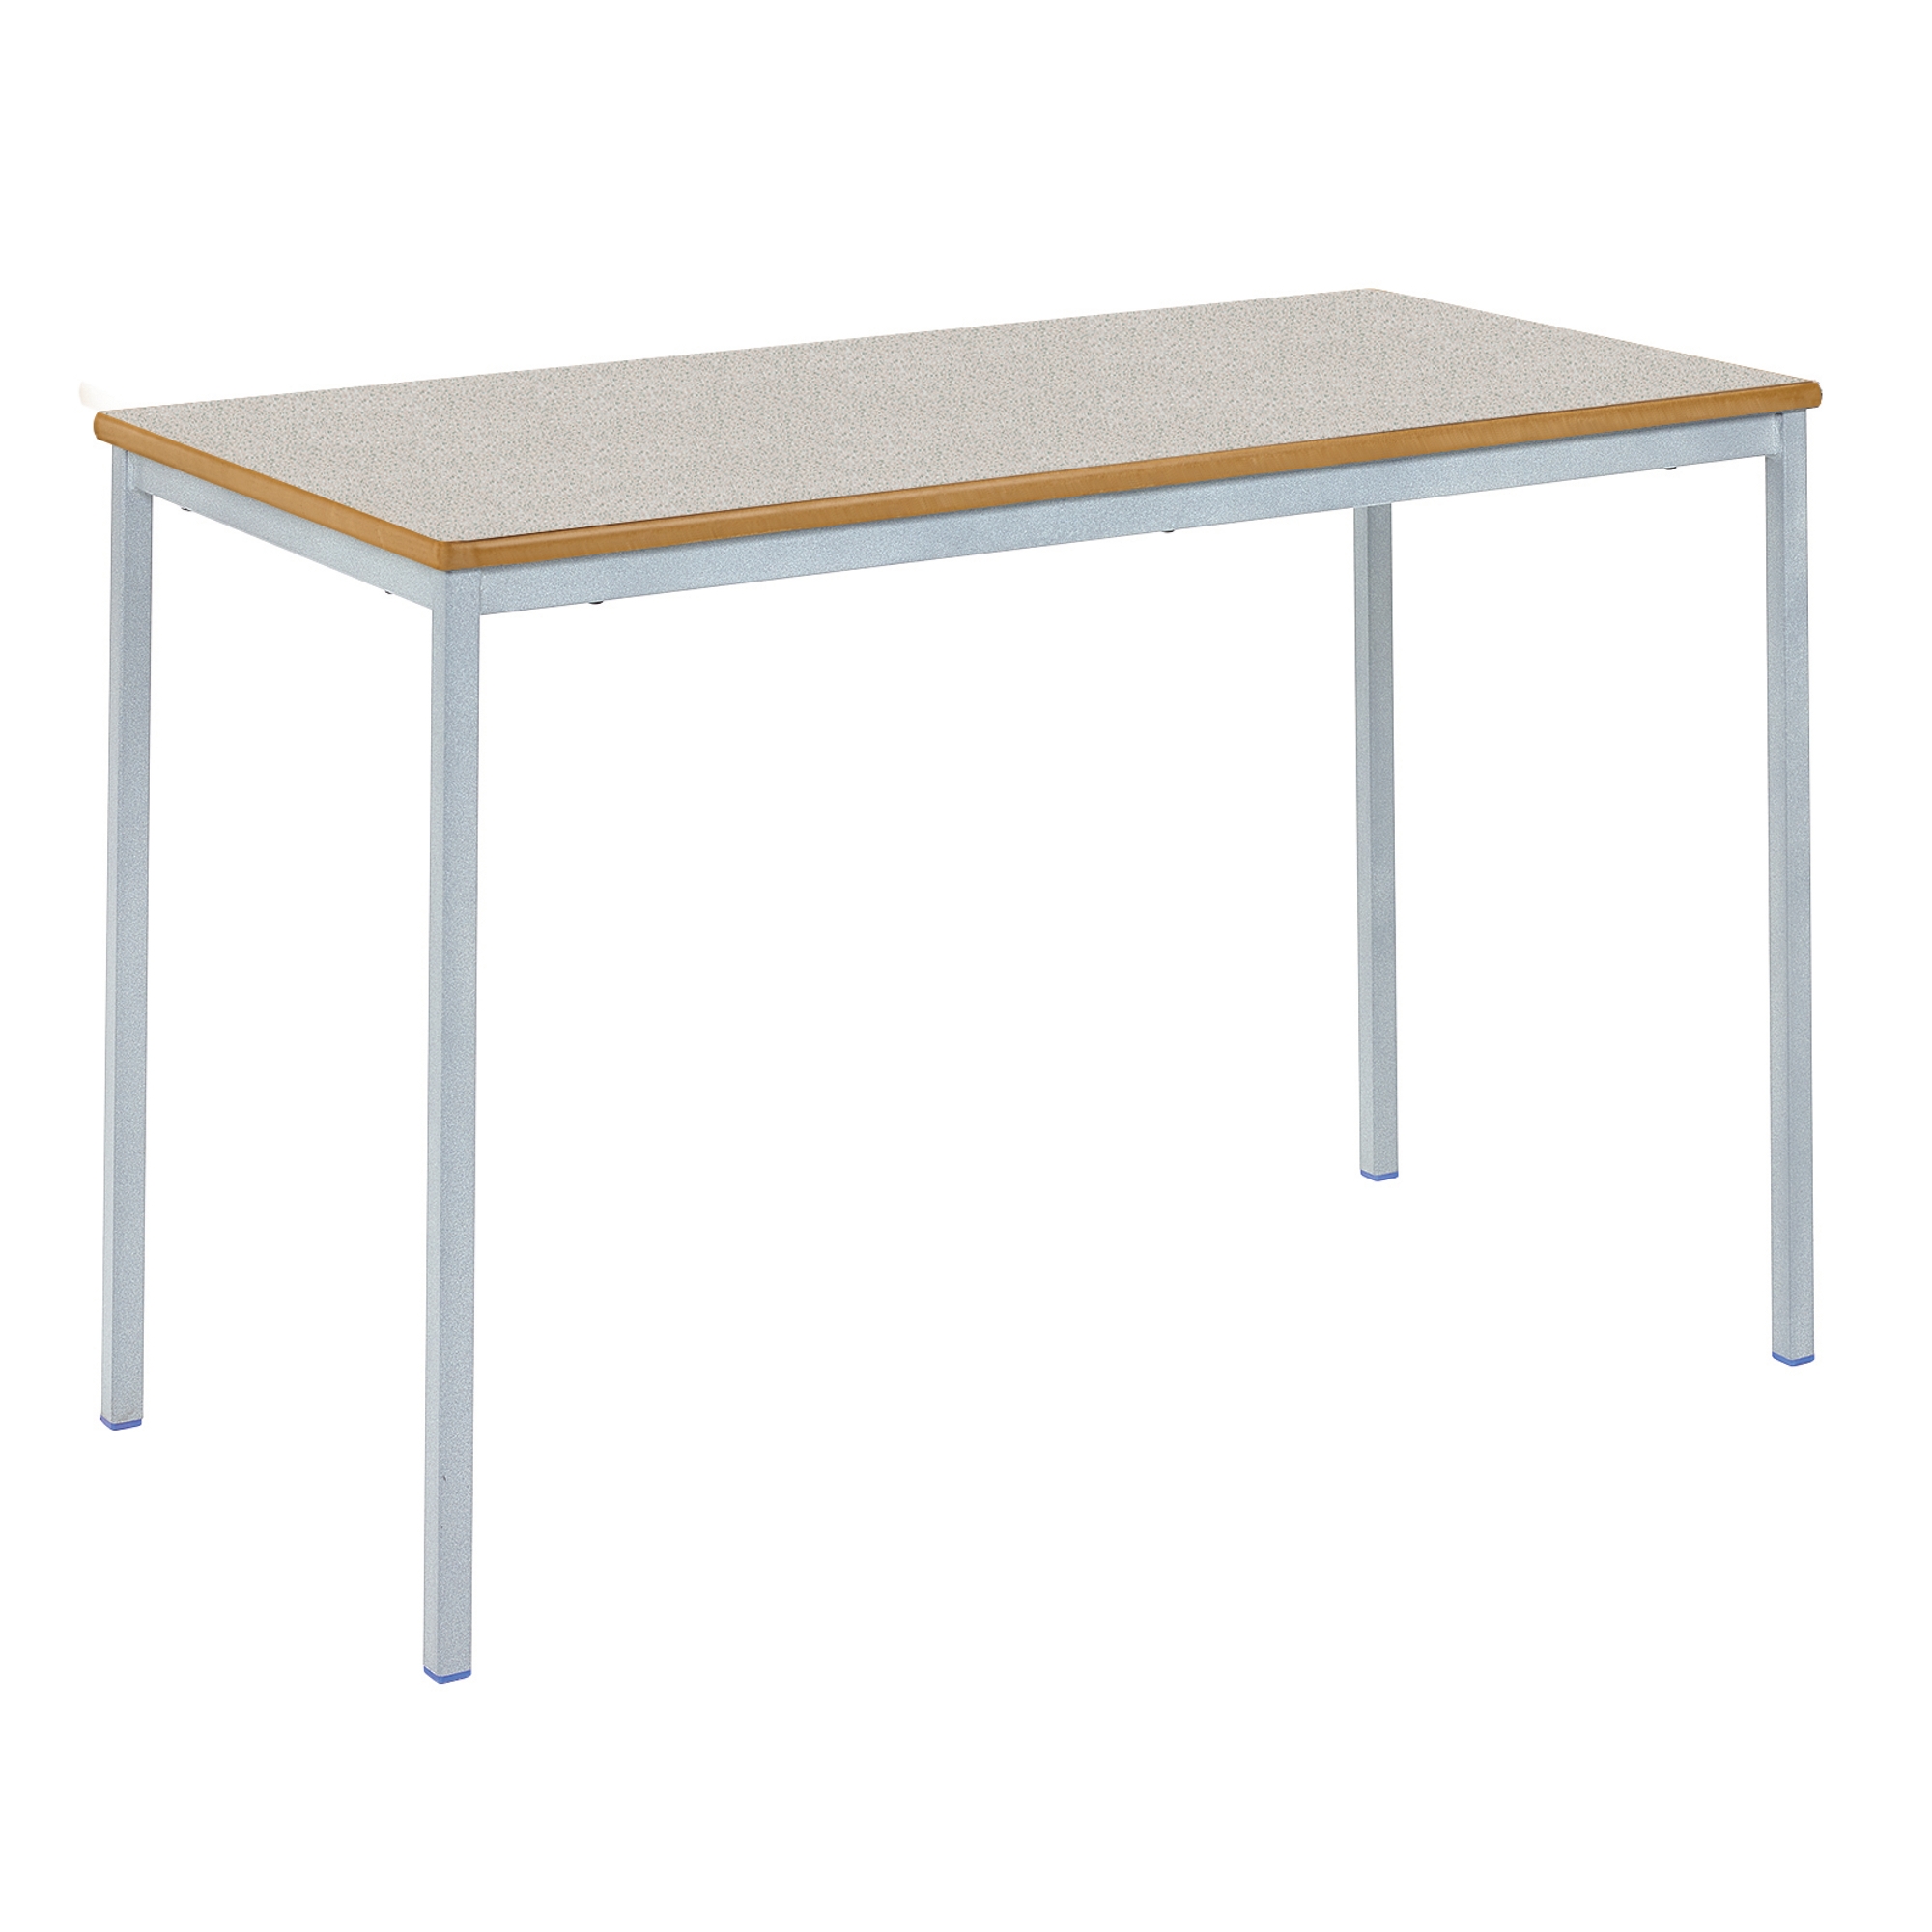 Classmates Rectangular Fully Welded Classroom Table - 1100 x 550 x 530mm - Ailsa